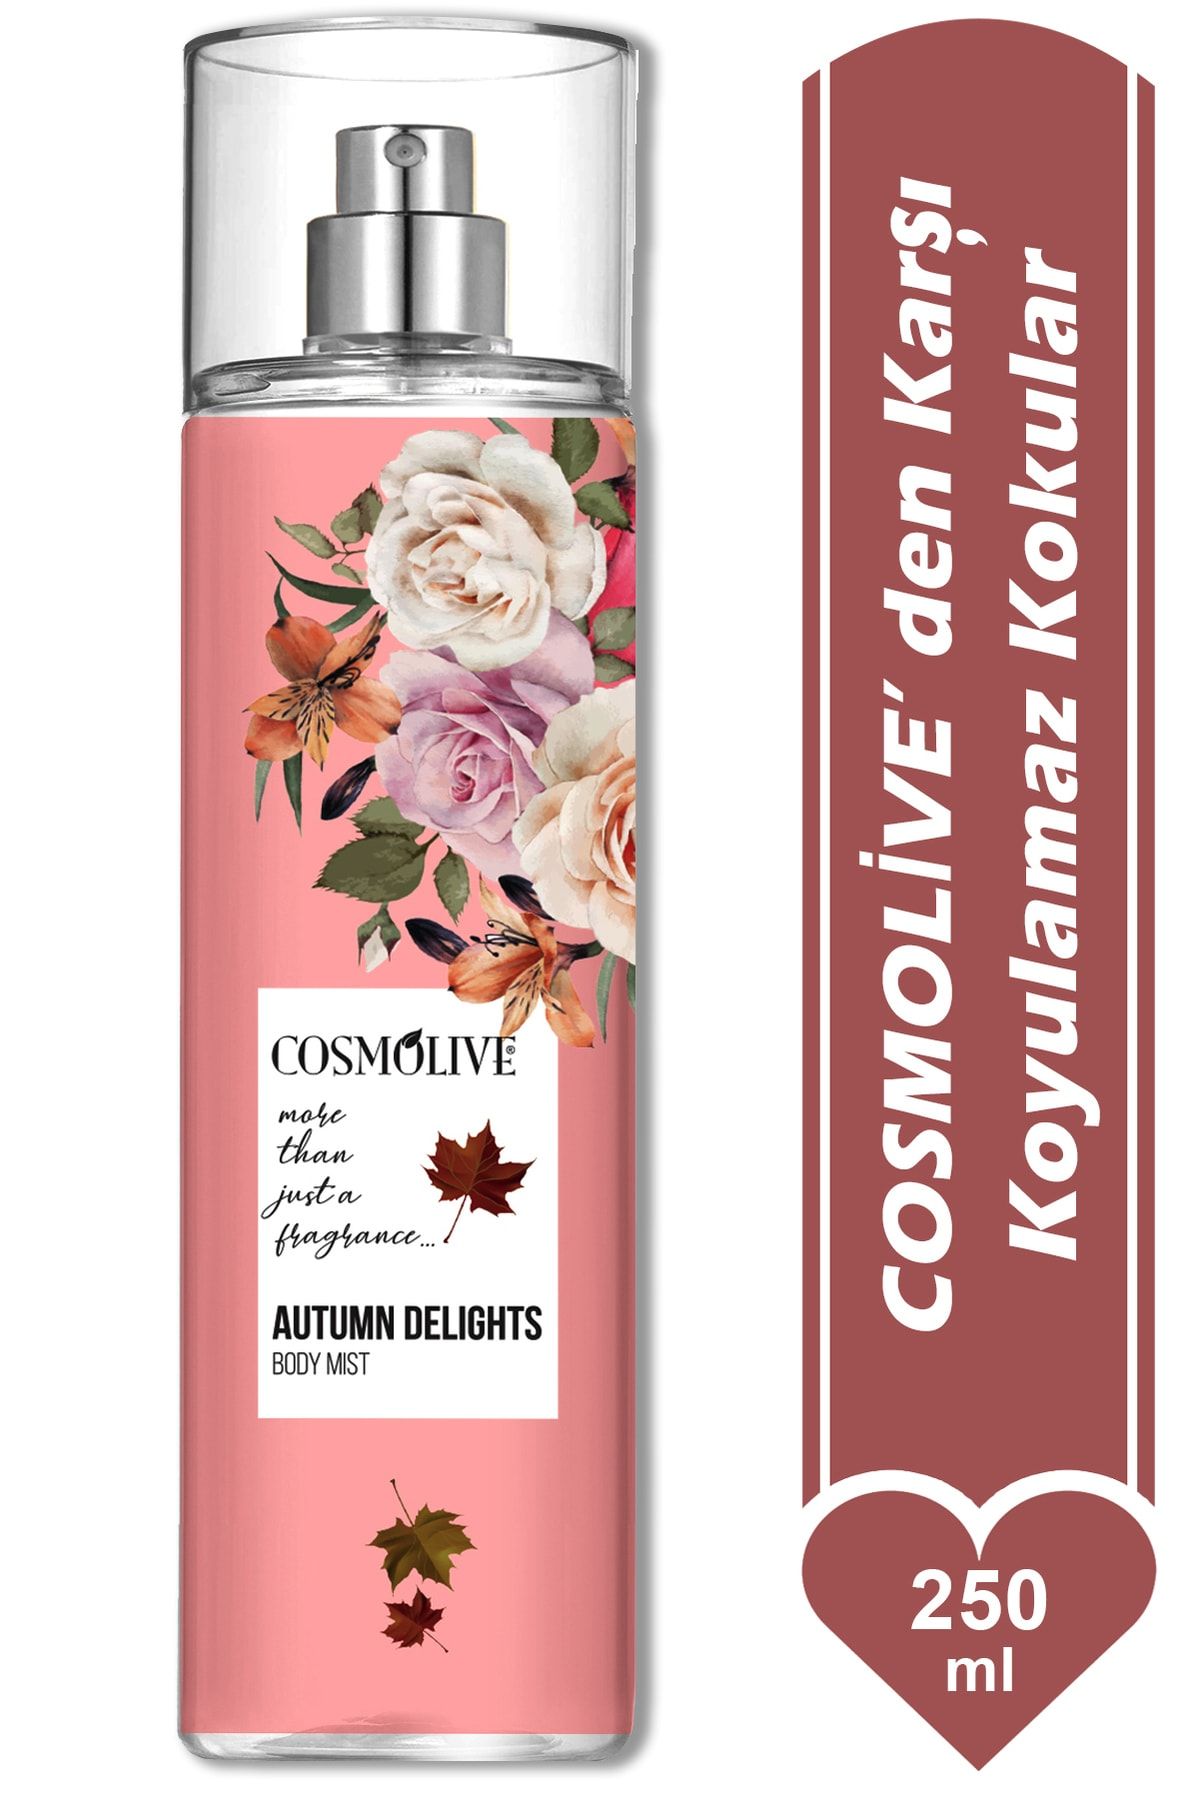 Cosmolive Body Mist Vücut Spreyi - Nemlendirici Parfüm 250 Ml. Autumn Delights Autumn Delights